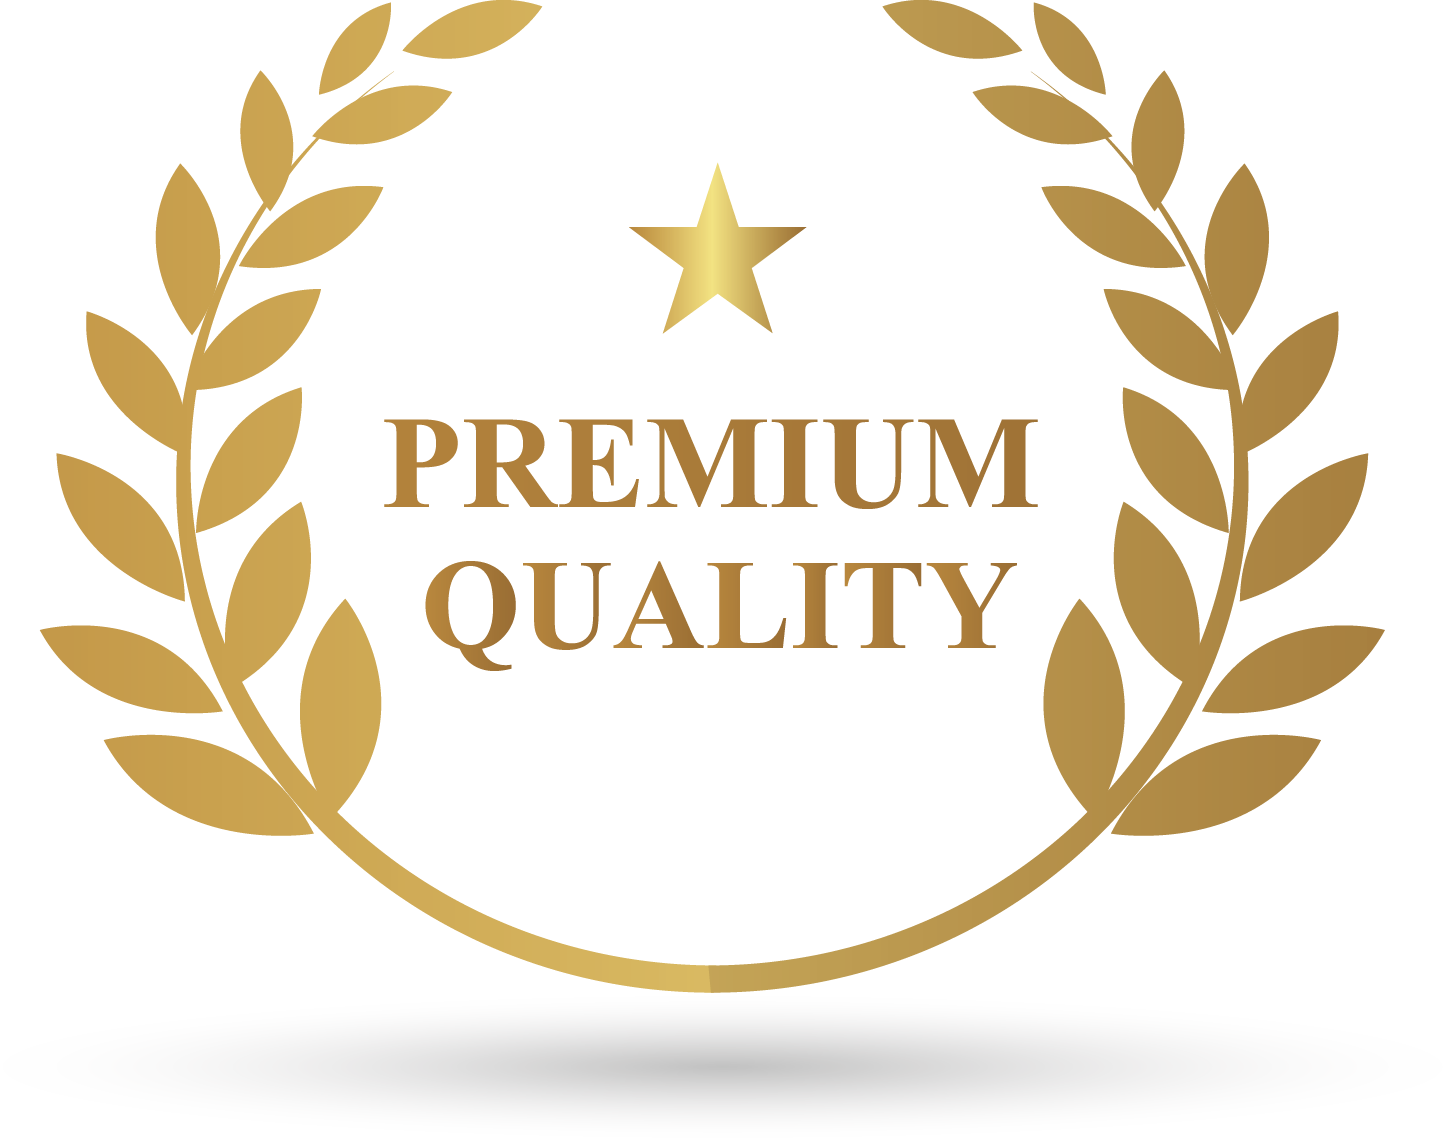 Premium icons. Премиум качество. Значок премиум качество. Логотип премиальное качество. Premium качество логотип.